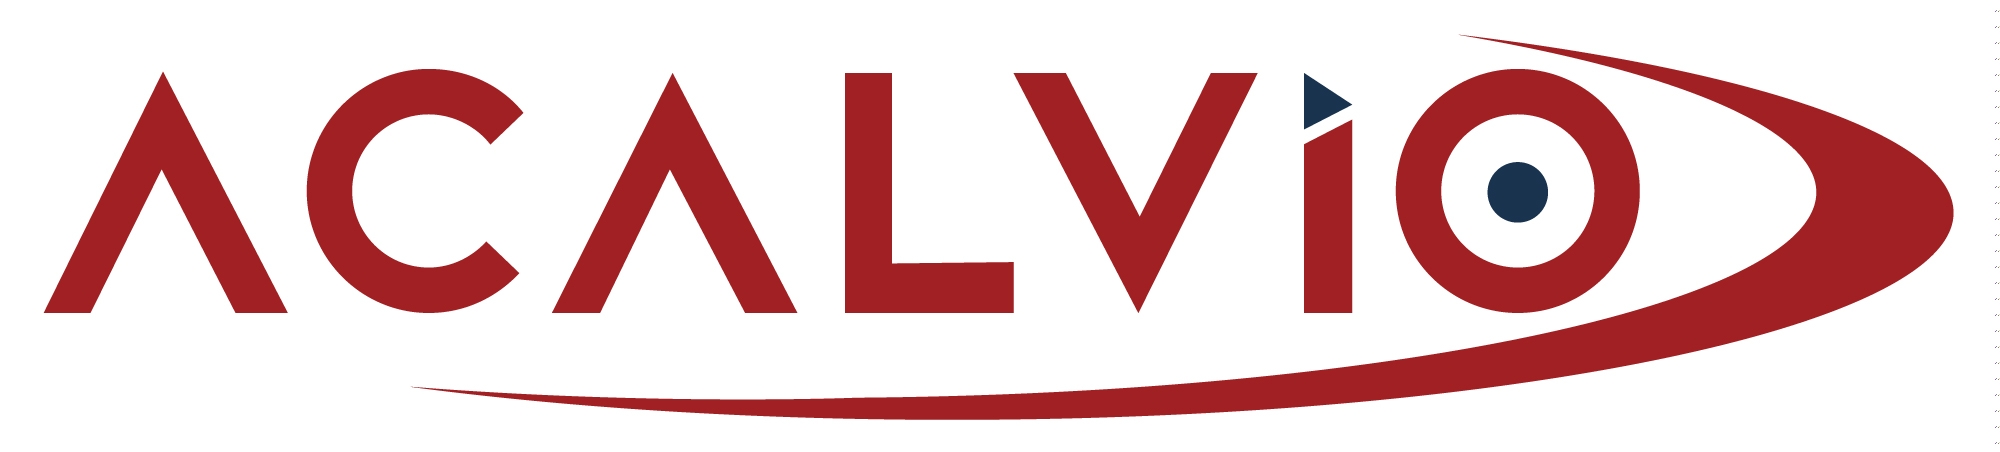 acalvio_logo.jpg